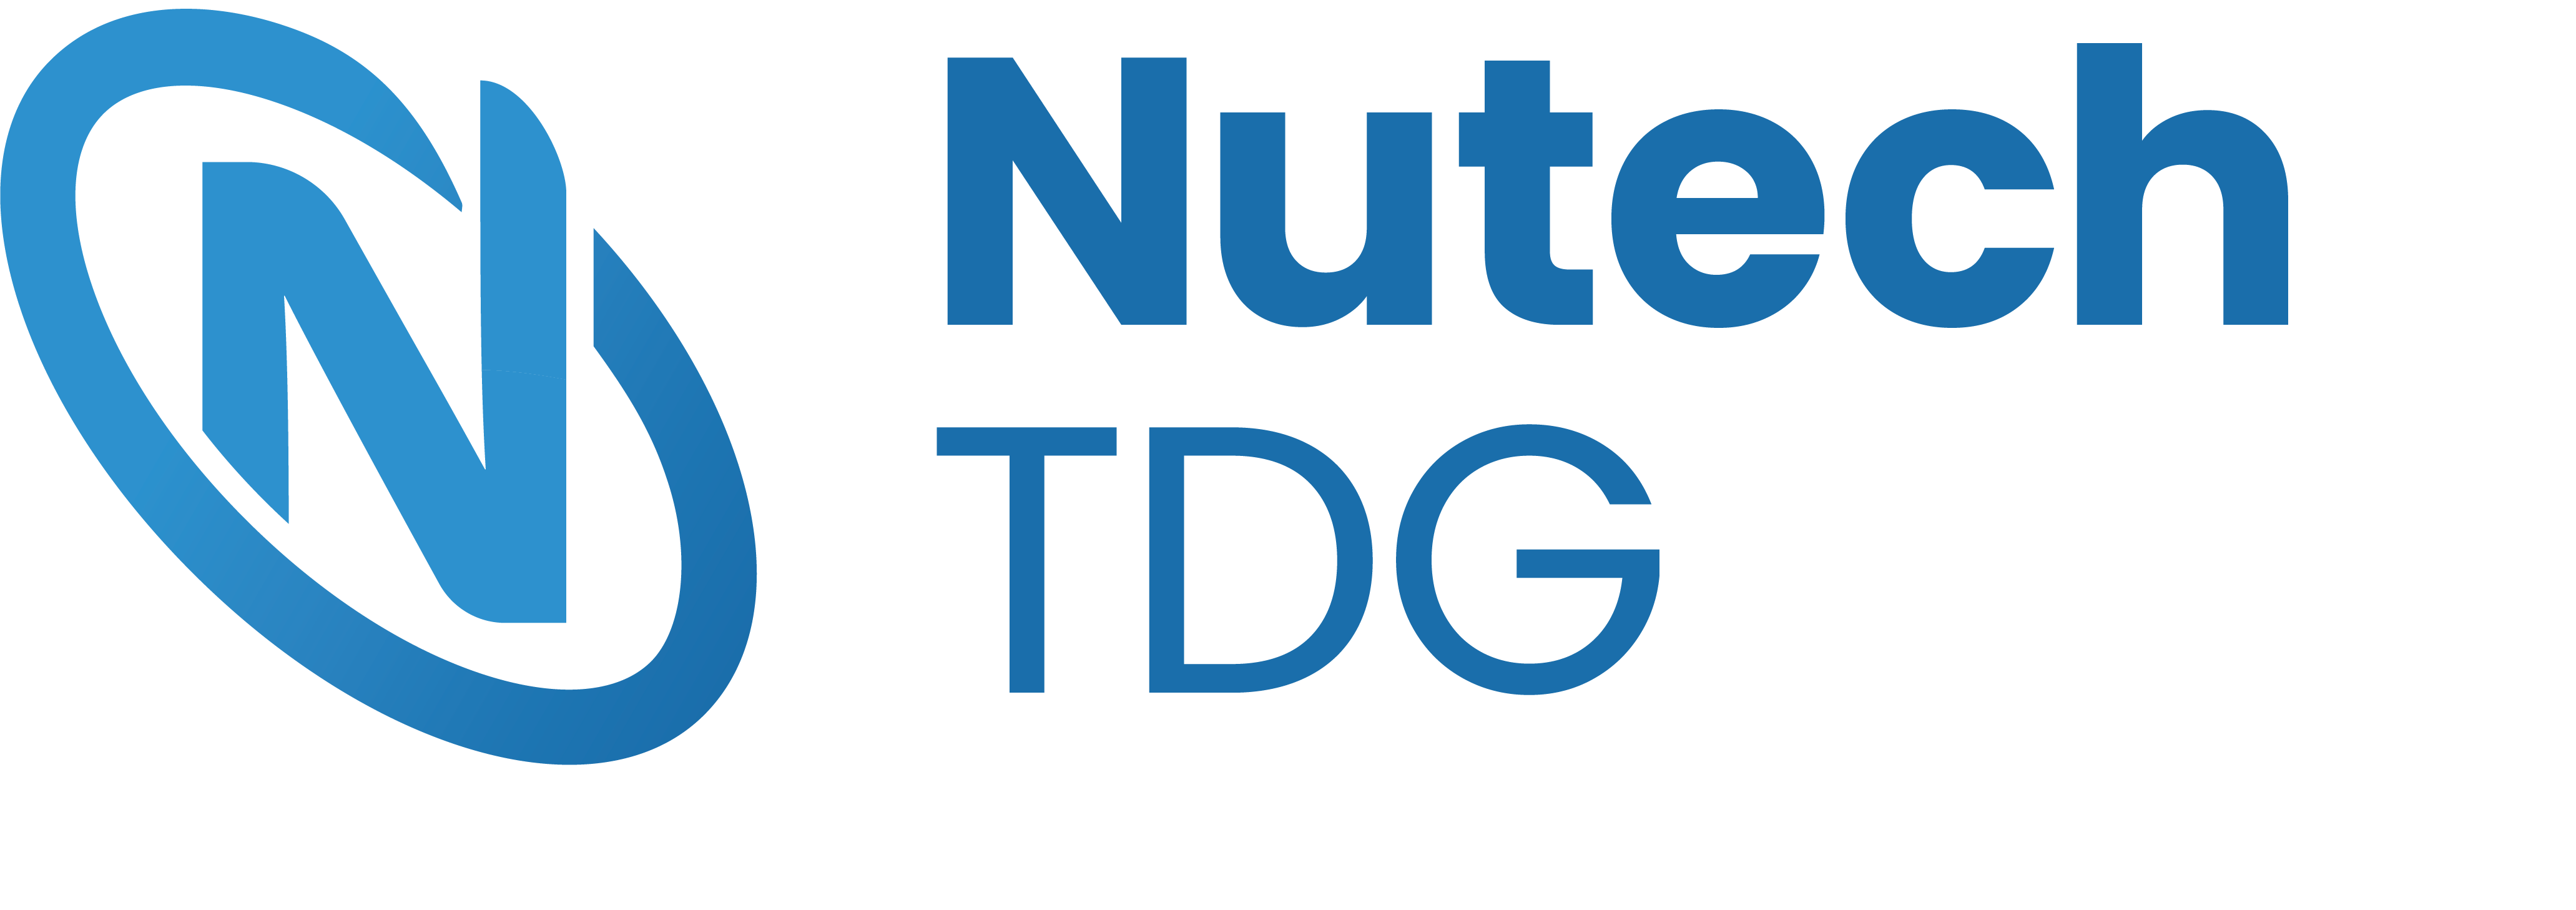 Nutech TDG Logo